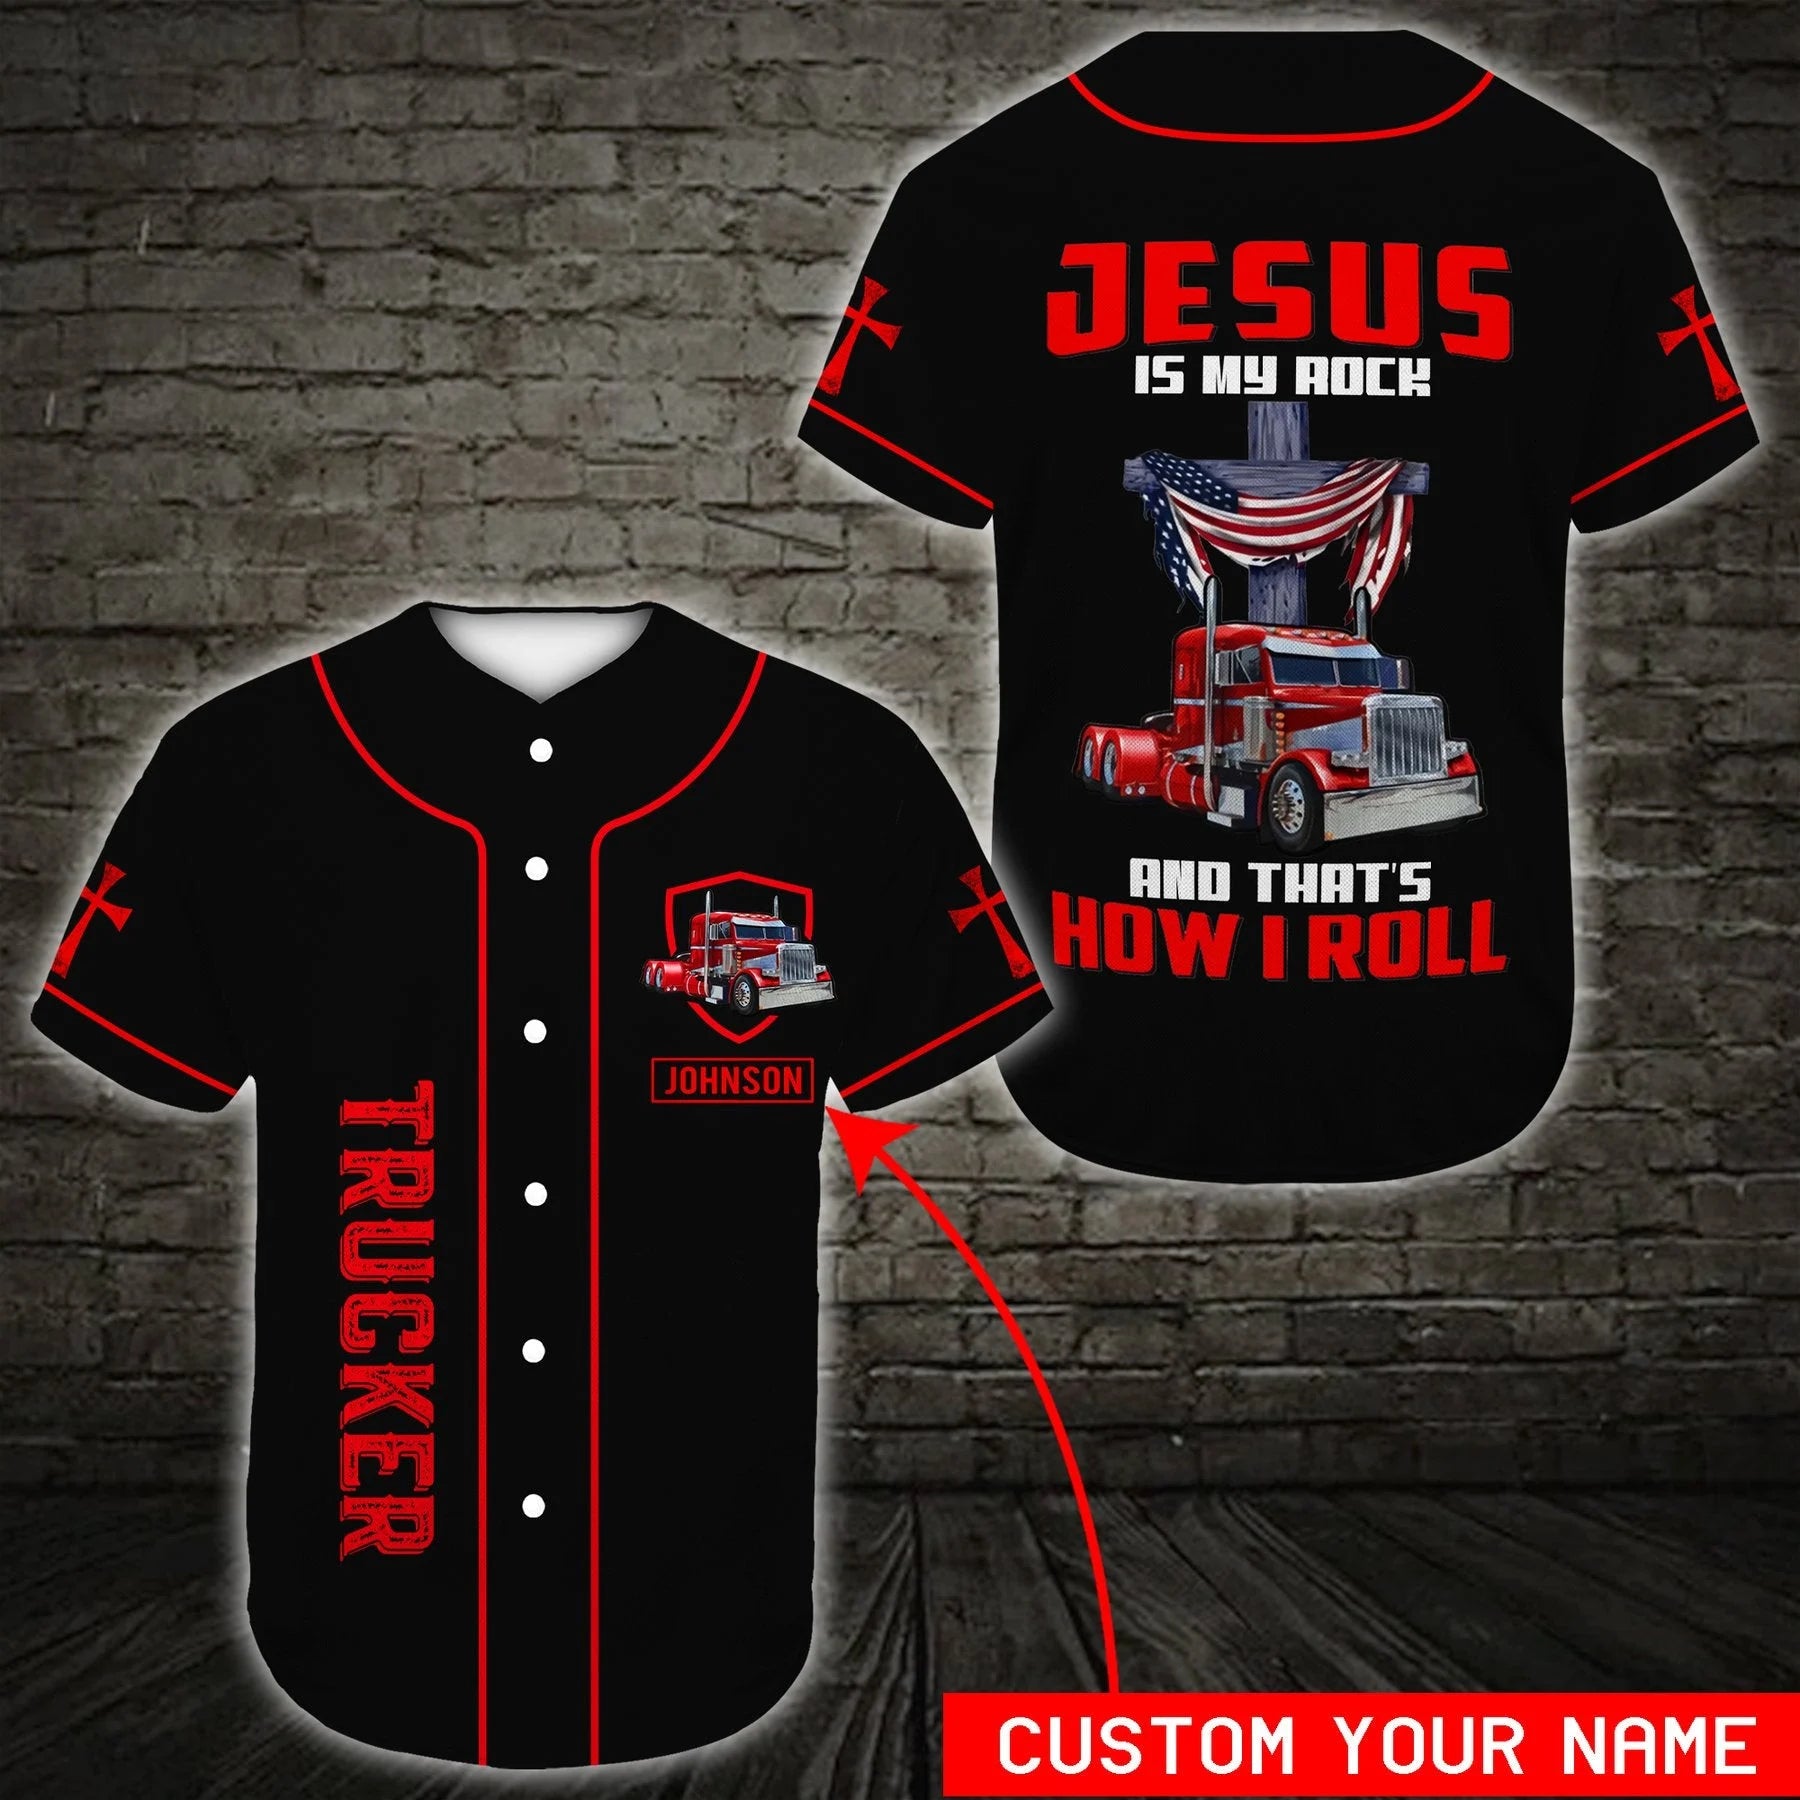 Personalized Jesus Baseball Jersey - Cross, Trucker Baseball Jersey - Gift For Christians - Jesus Is My Rock Custom Baseball Jersey Shirt For Men Women